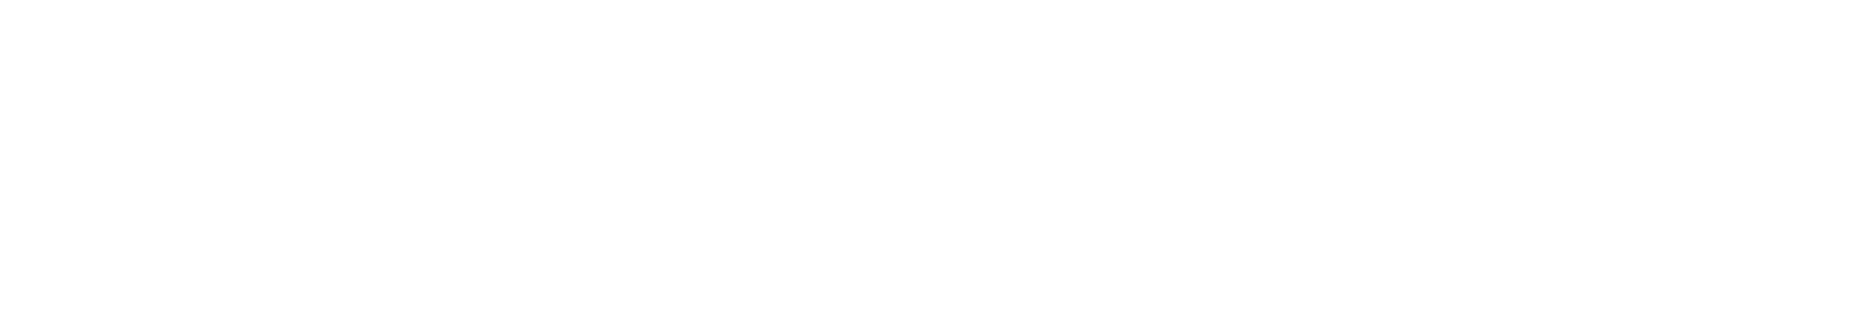 STRATEGIES logo blanc